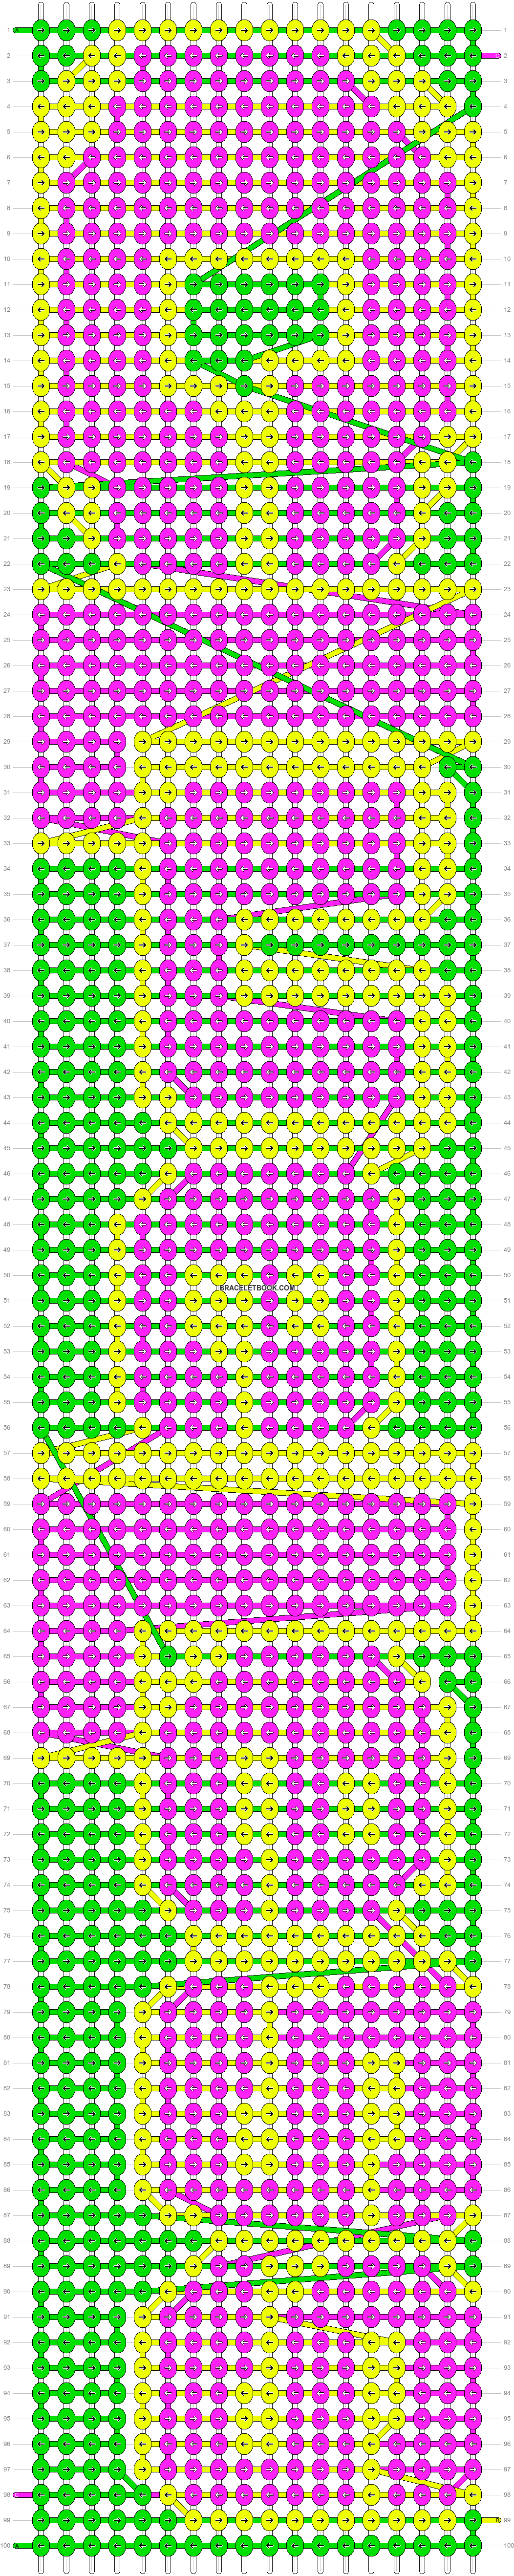 Alpha pattern #39554 variation #58609 pattern